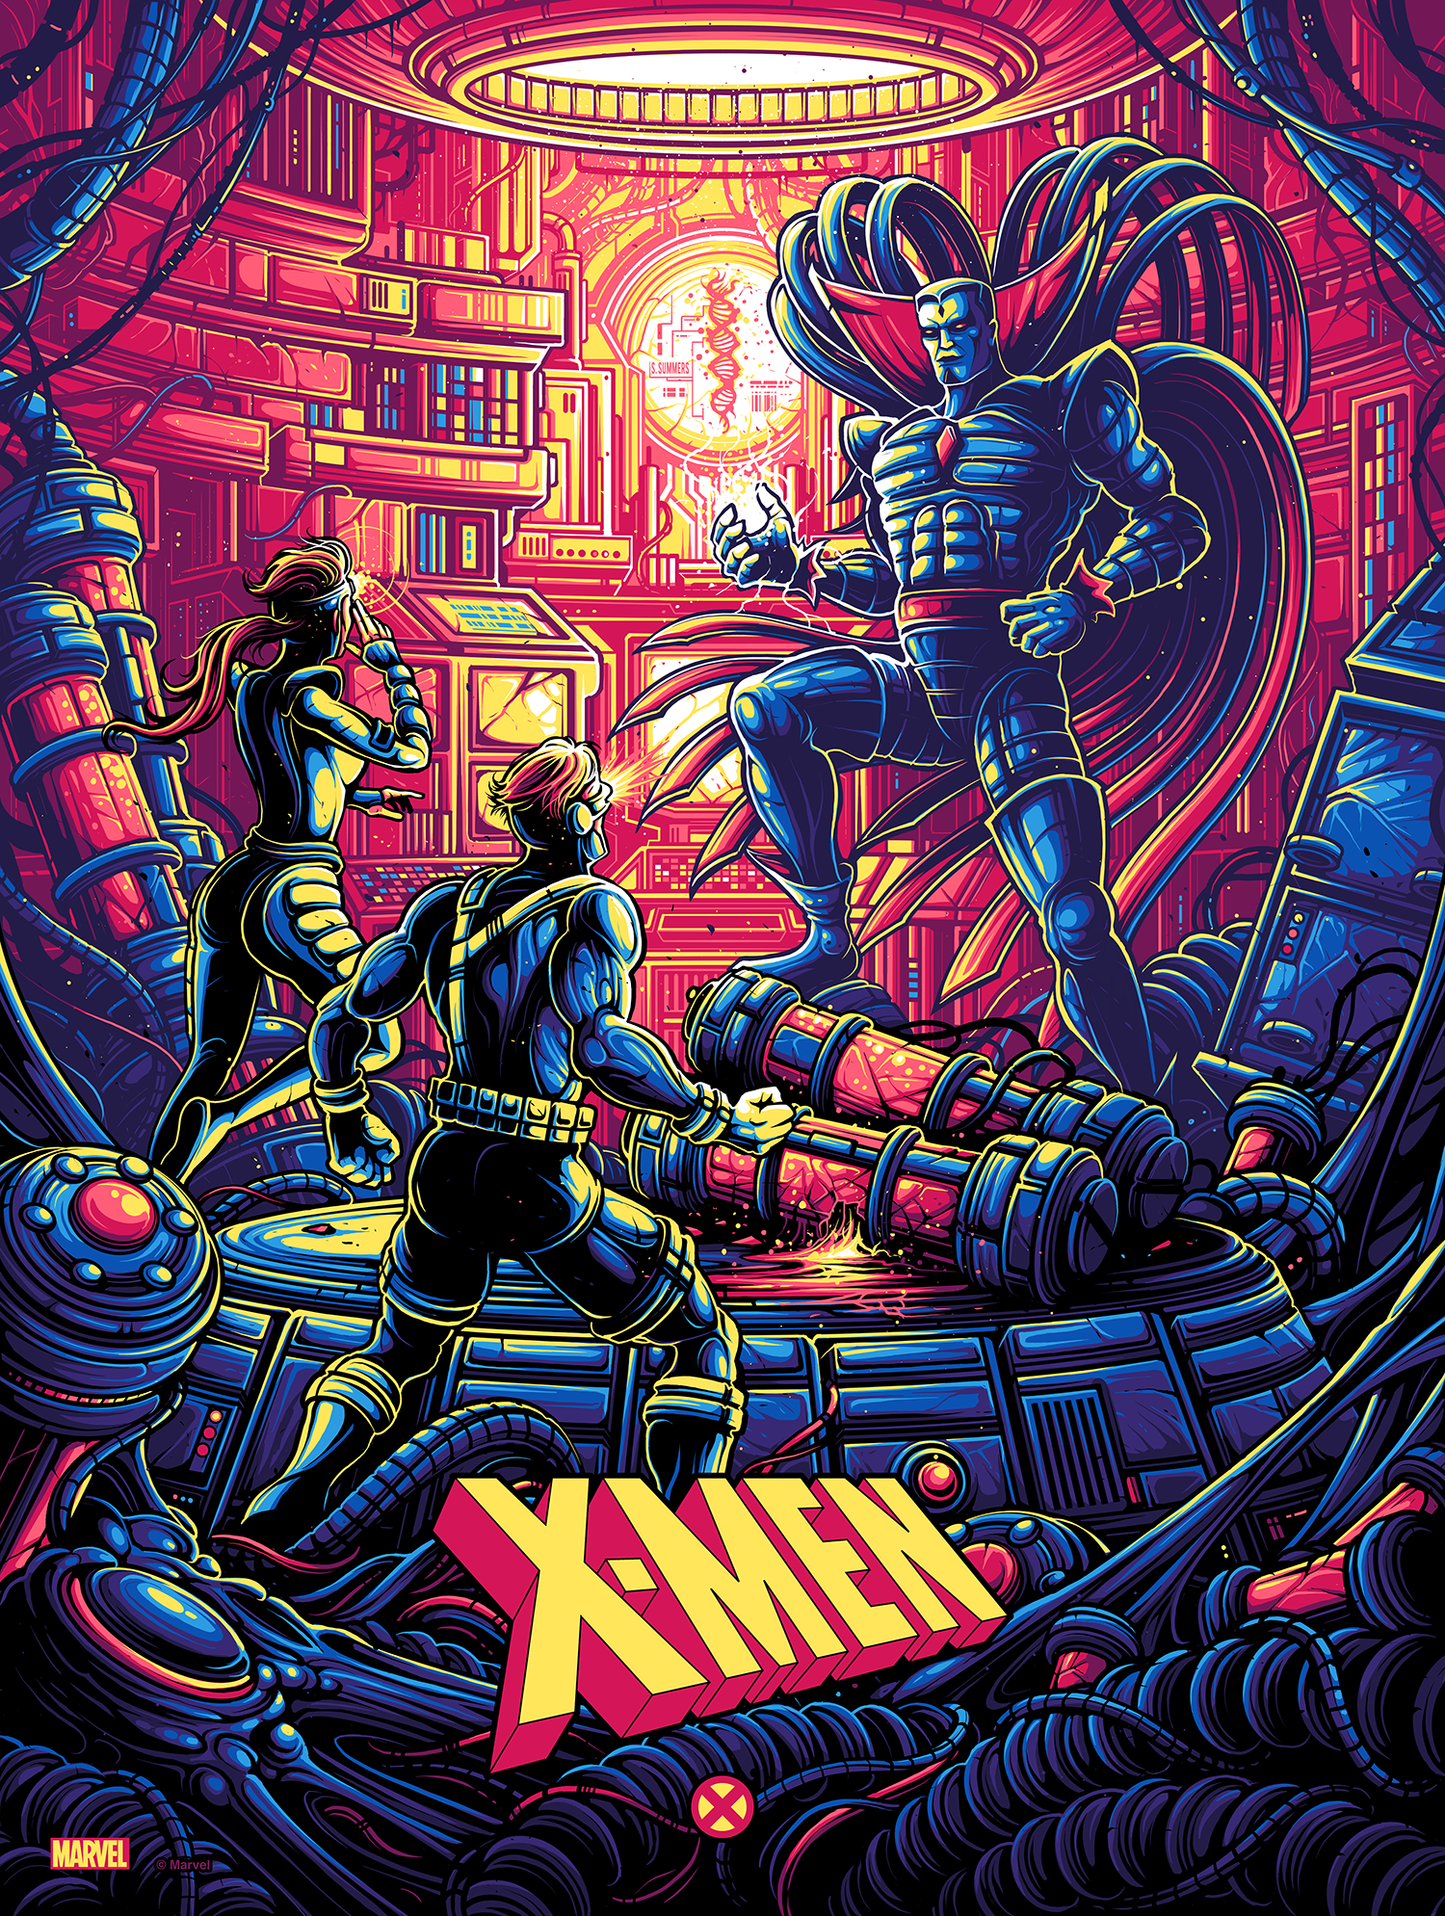 Dan Mumford "X-Men vs. Sinister"